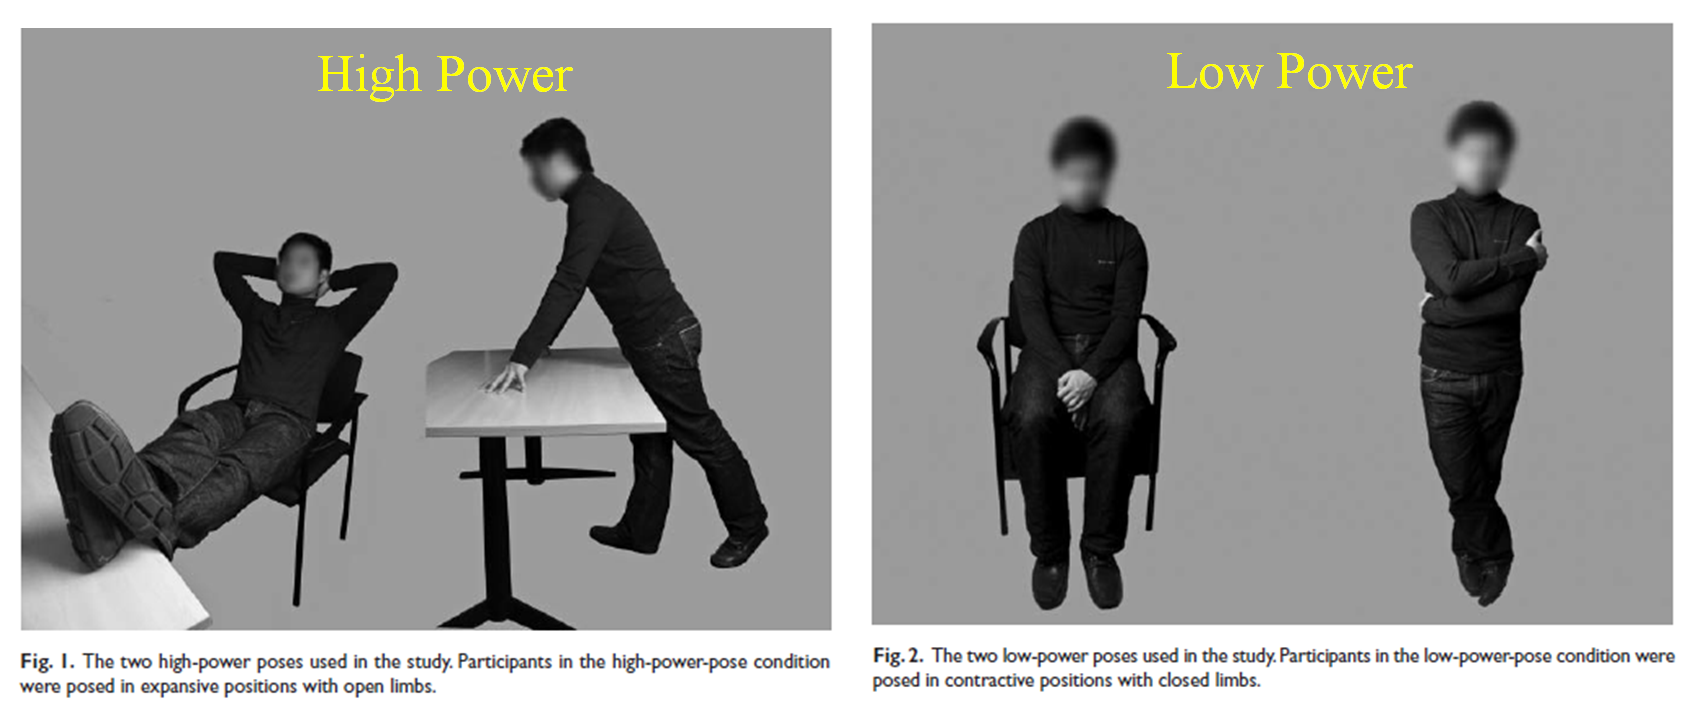 Power poses